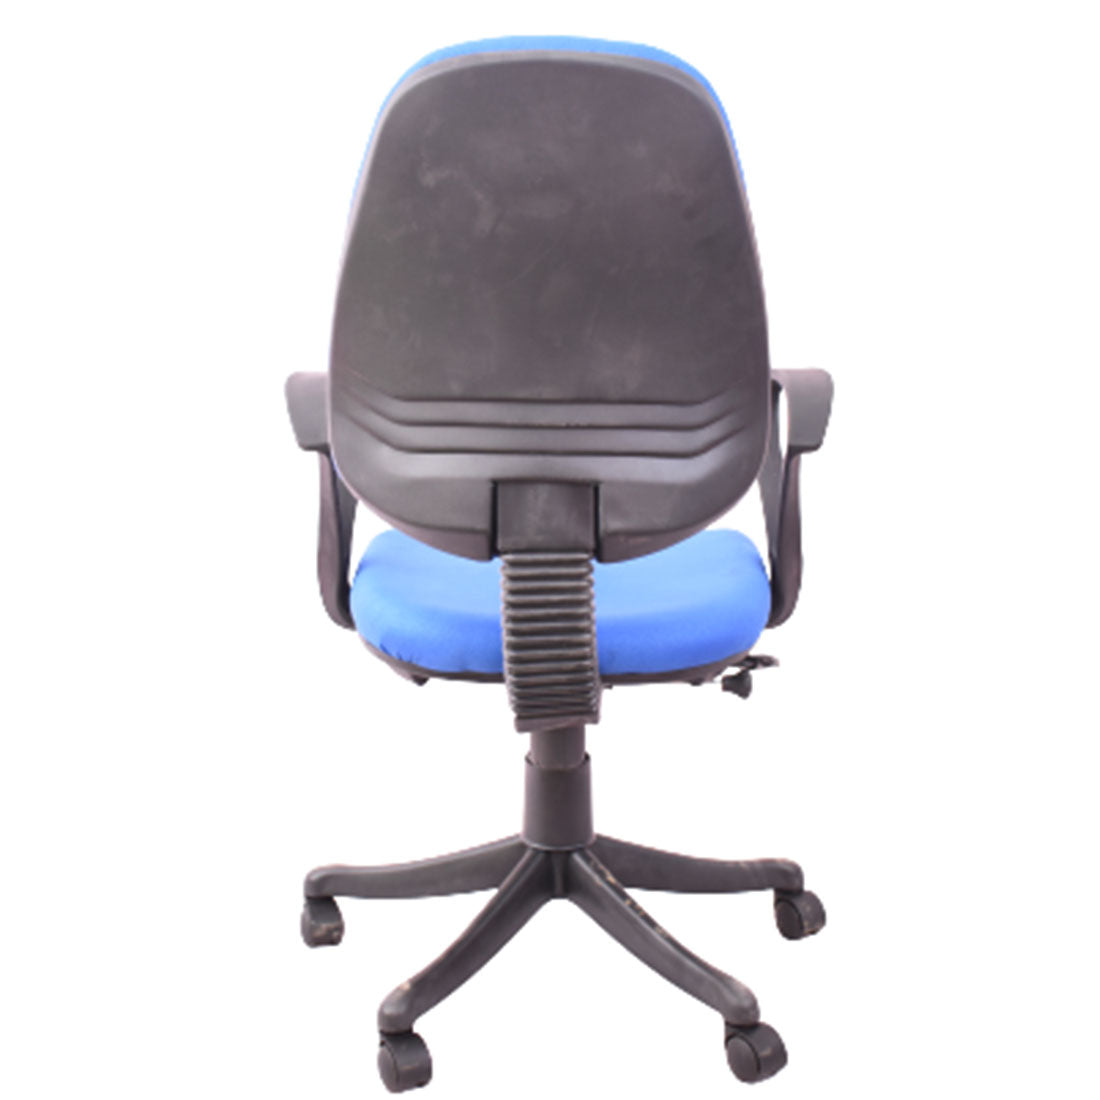  Comfort Medium Back Revolving Chair for Office Purpose (Blue)